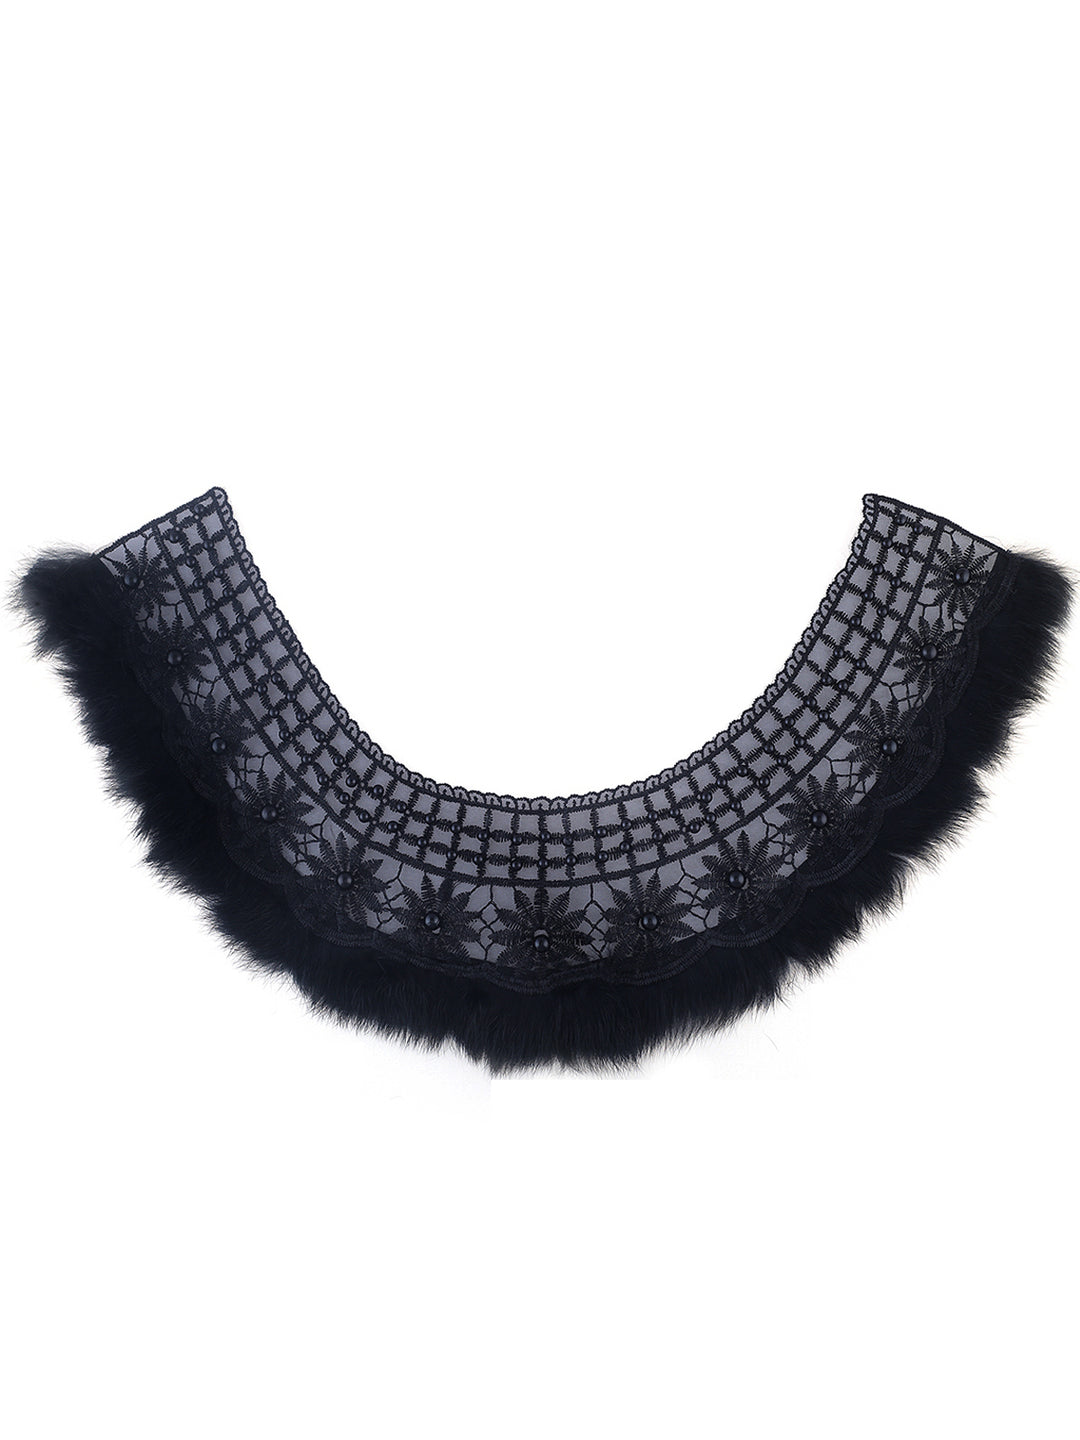 Designer Black Embroidery Beaded Neck with Fur Edge